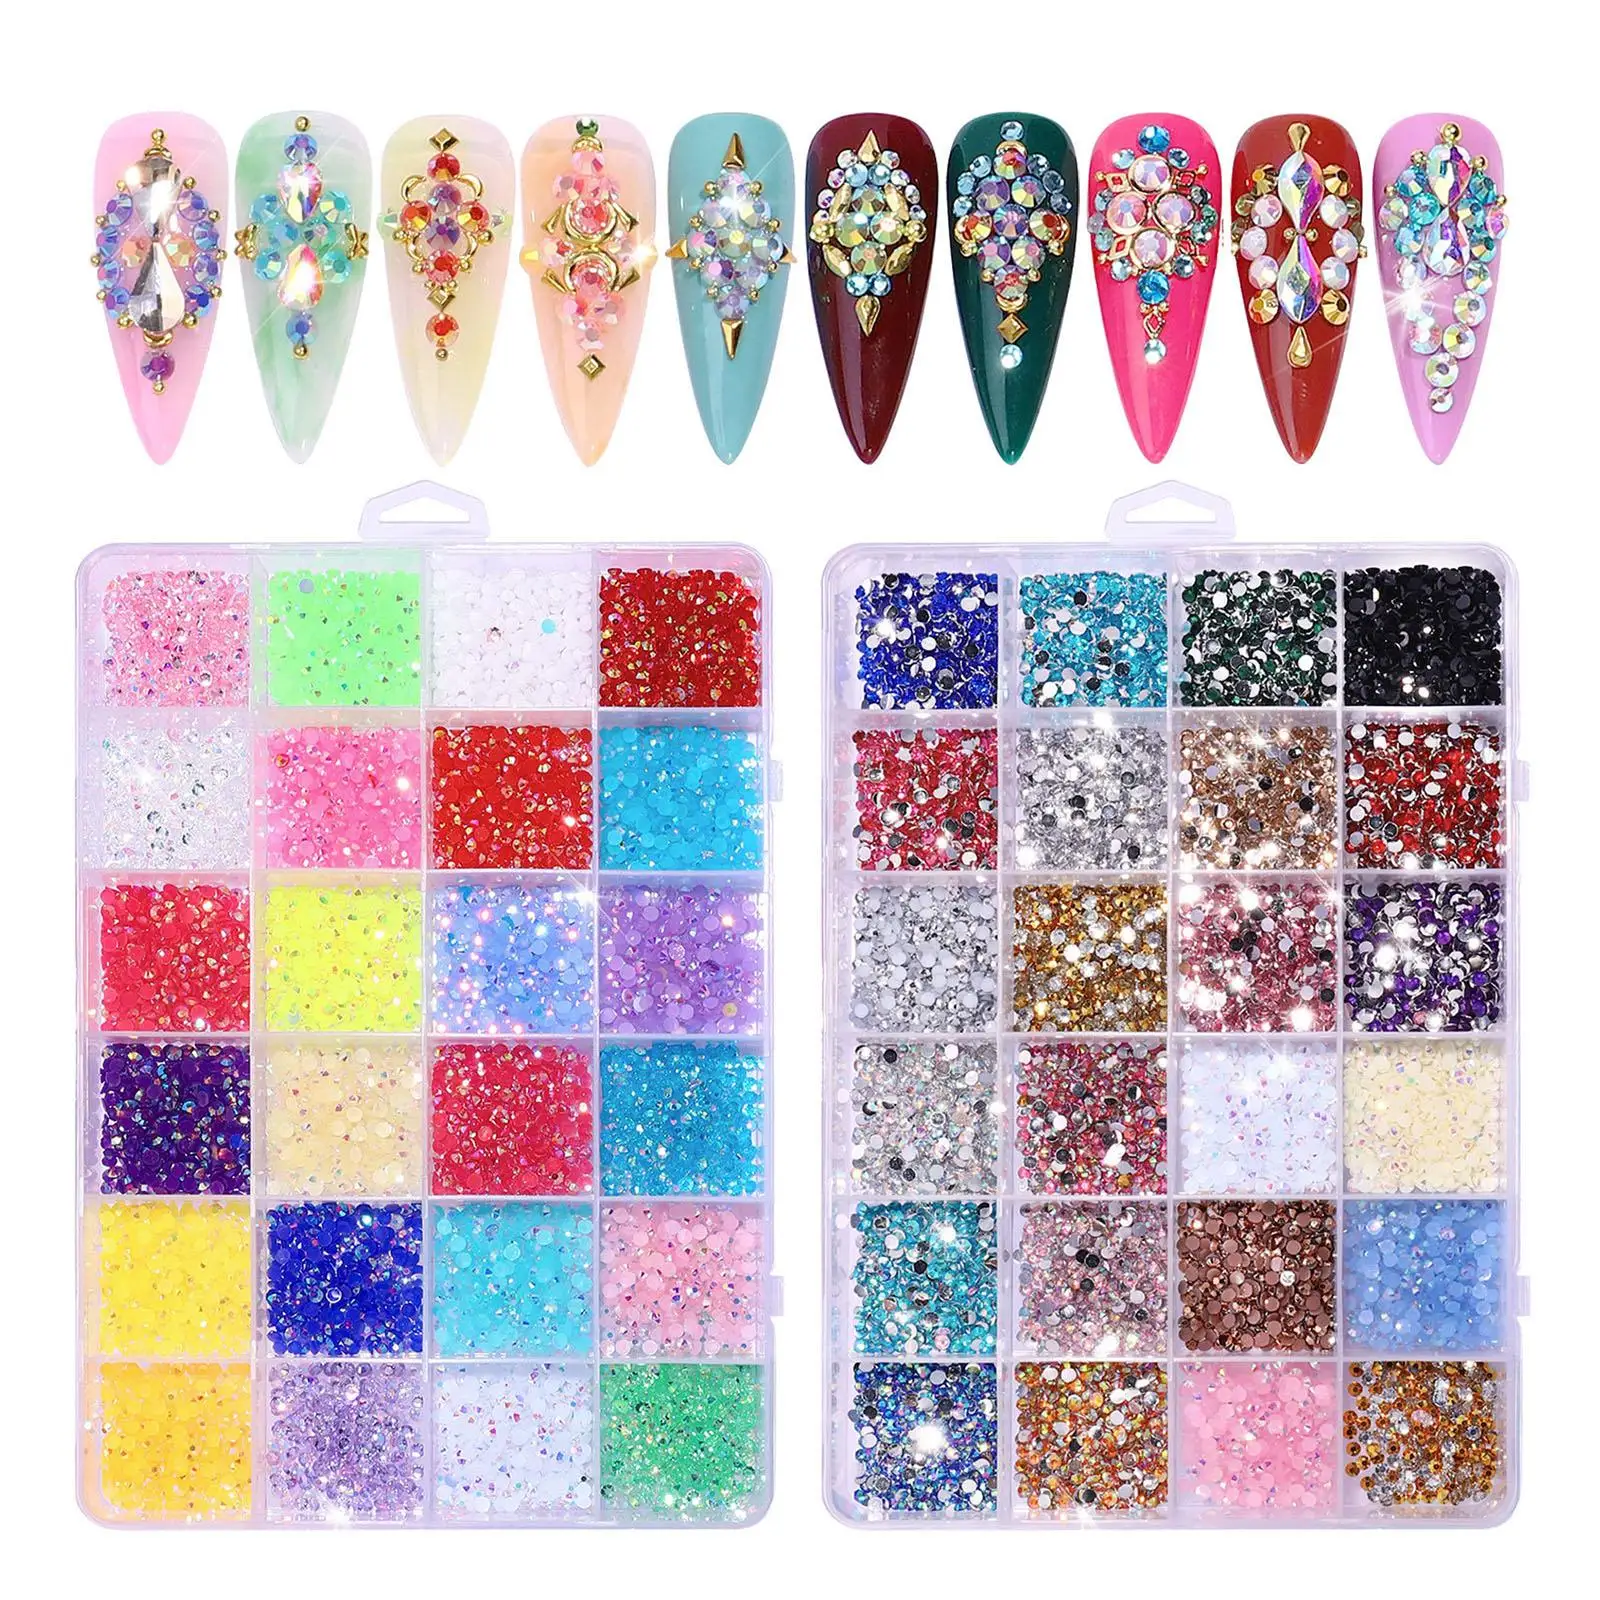 3500Pcs Nail Art Rhinestones Flatback Mixed Dazzling Diamonds Stones Gems Set for Nail Art Manicure Tip Decoration Hairpins Face